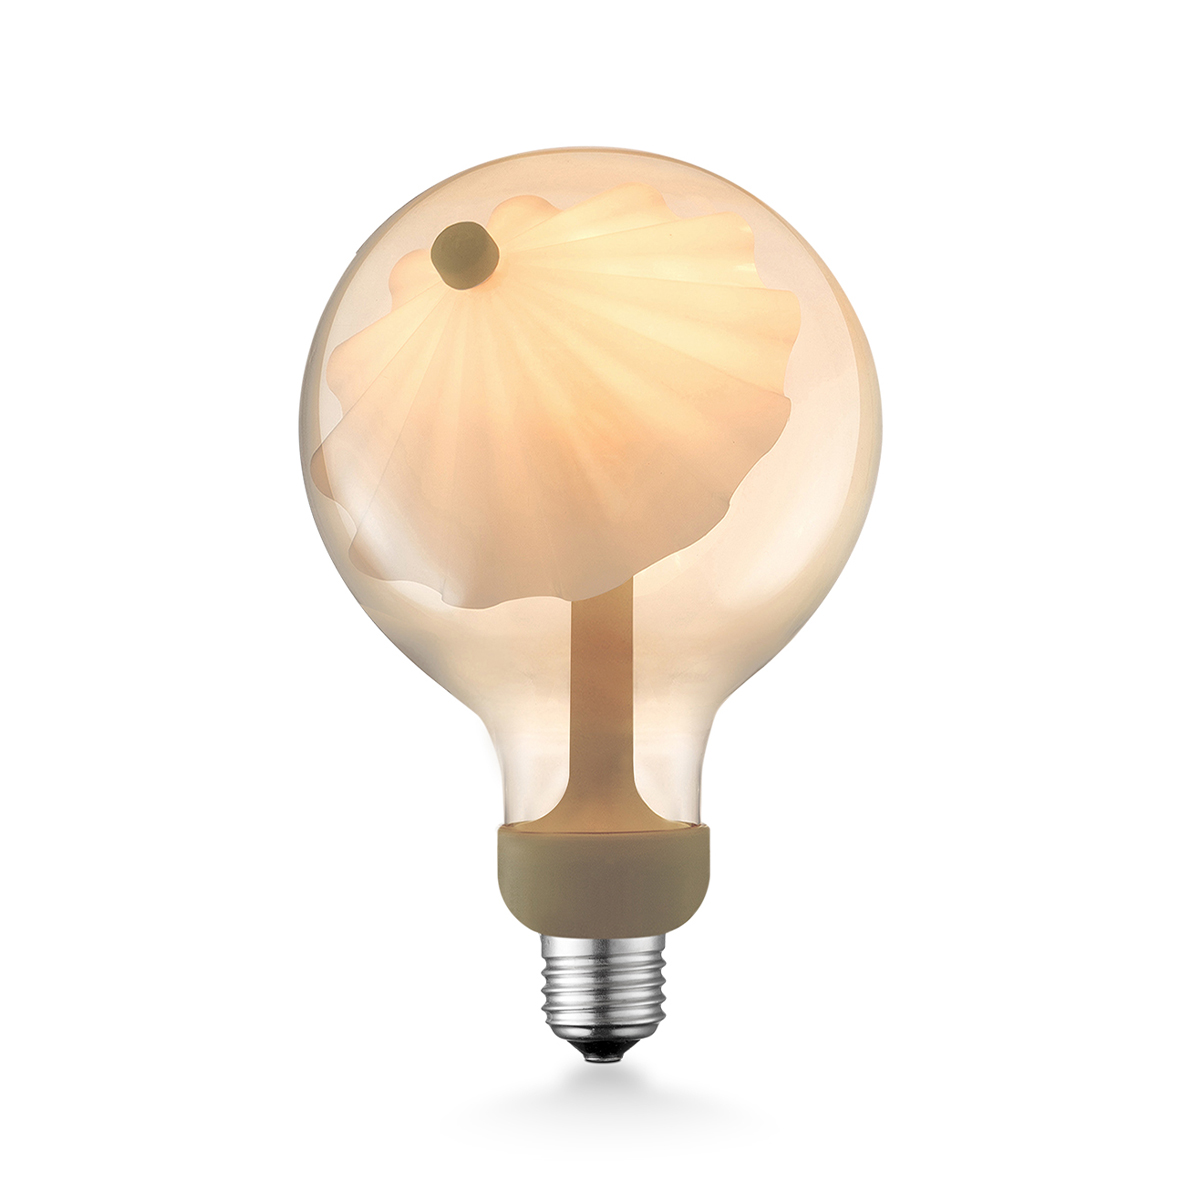 Tangla lighting - 0673-01-D - LED Light Bulb Move me - G120 5.5W Shell amber and - white - dimmable - E27 / E26